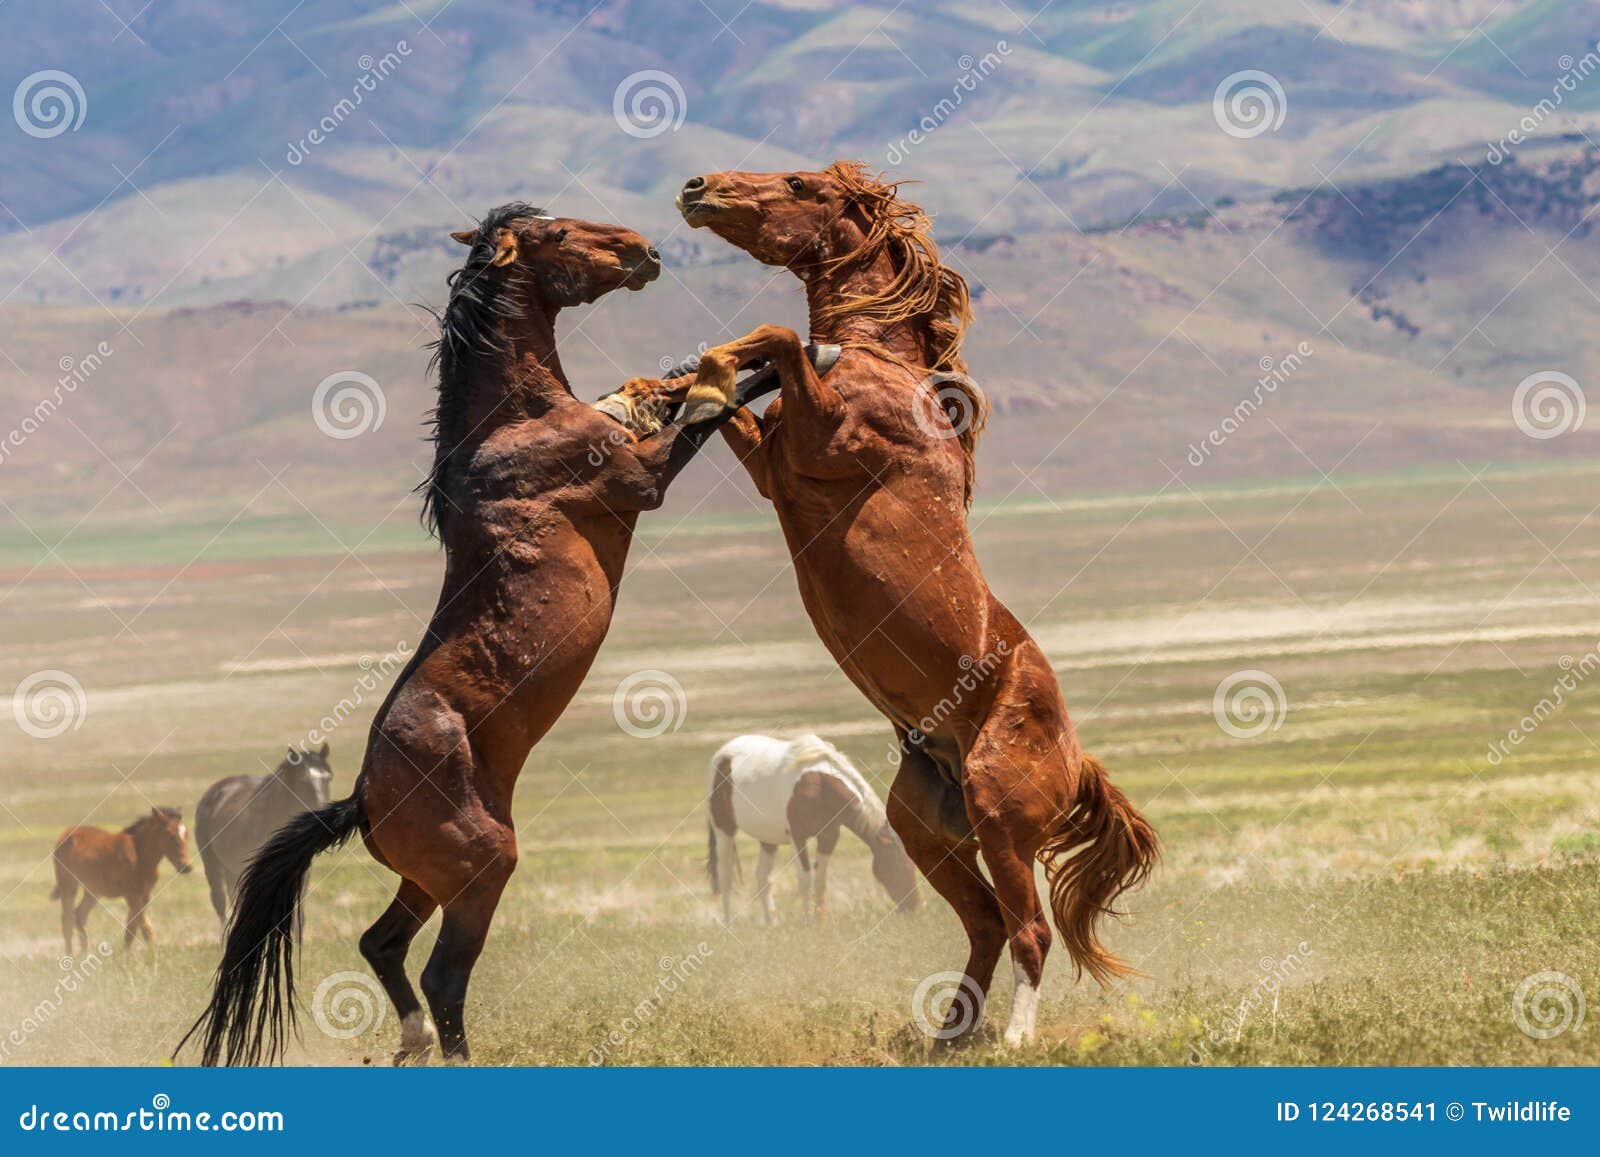 pair of wild horses fighting in summer